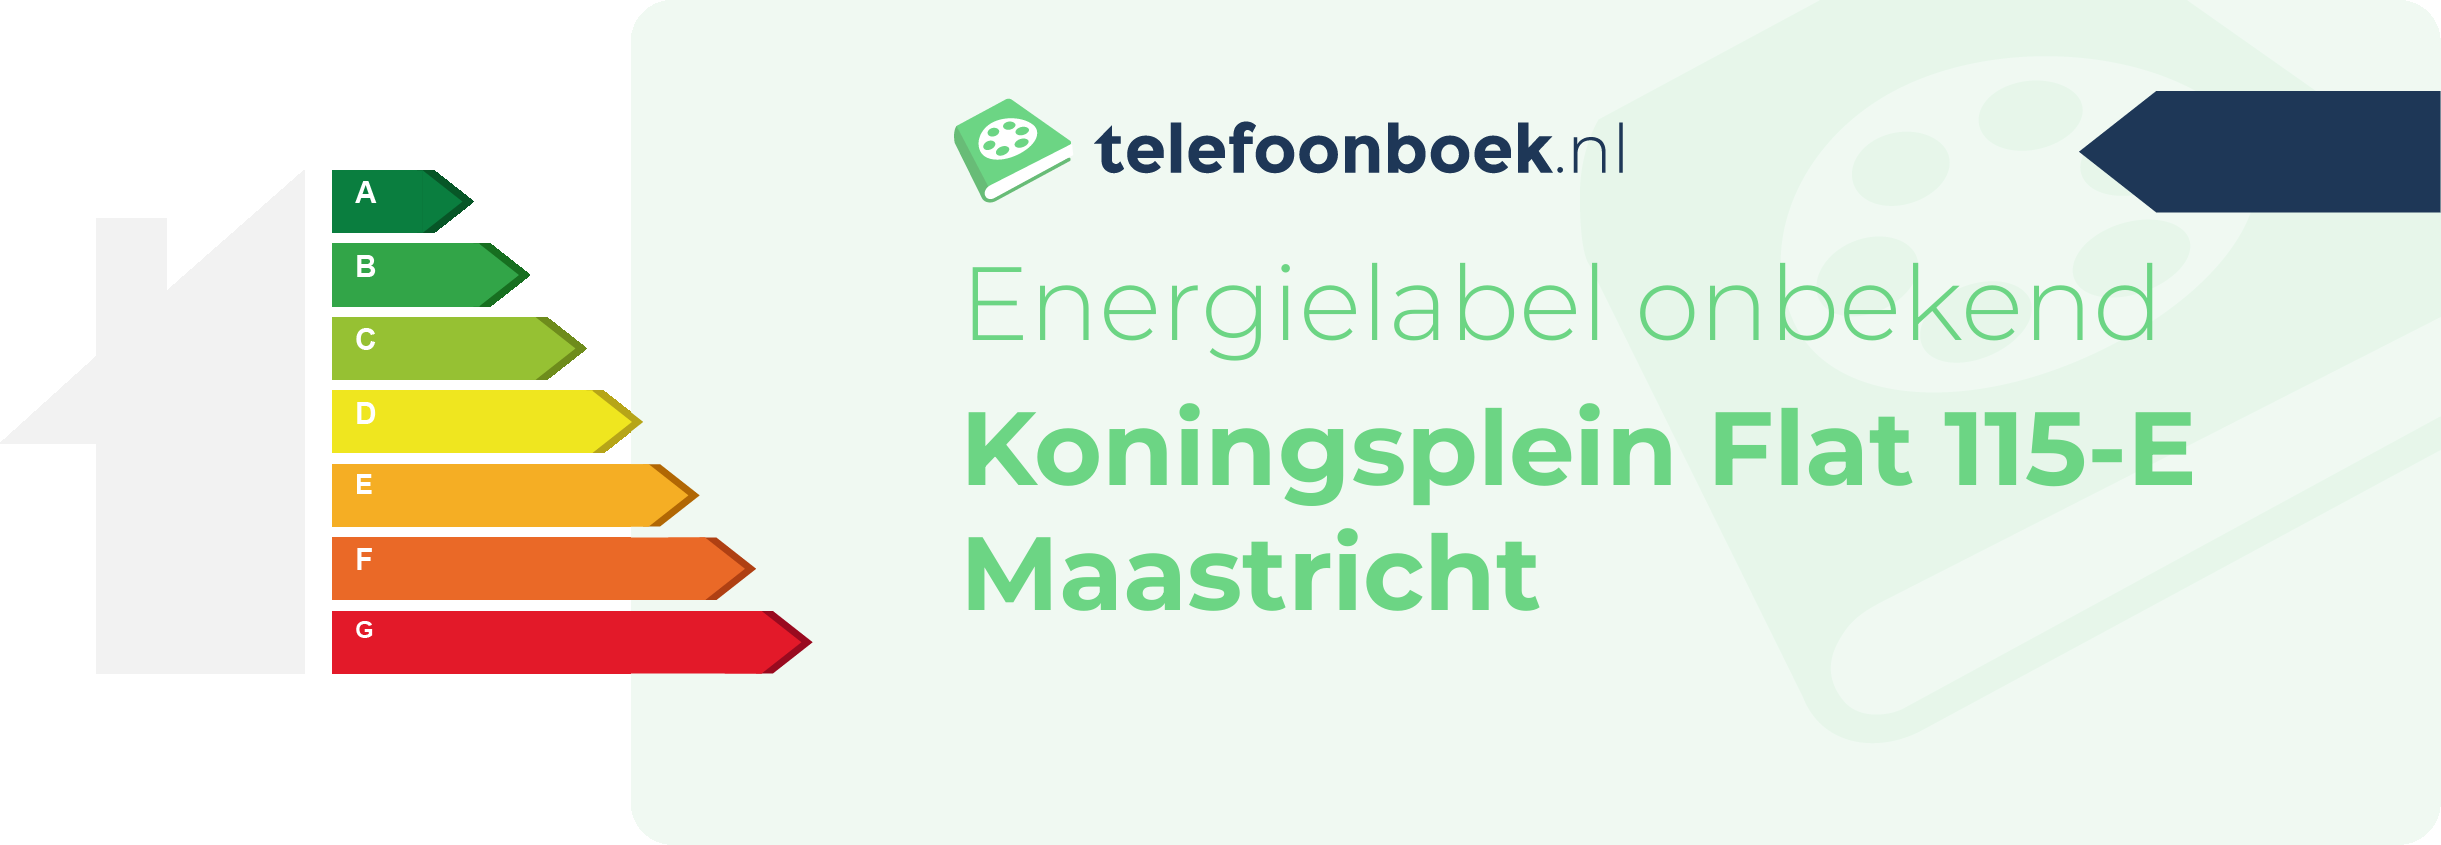 Energielabel Koningsplein Flat 115-E Maastricht